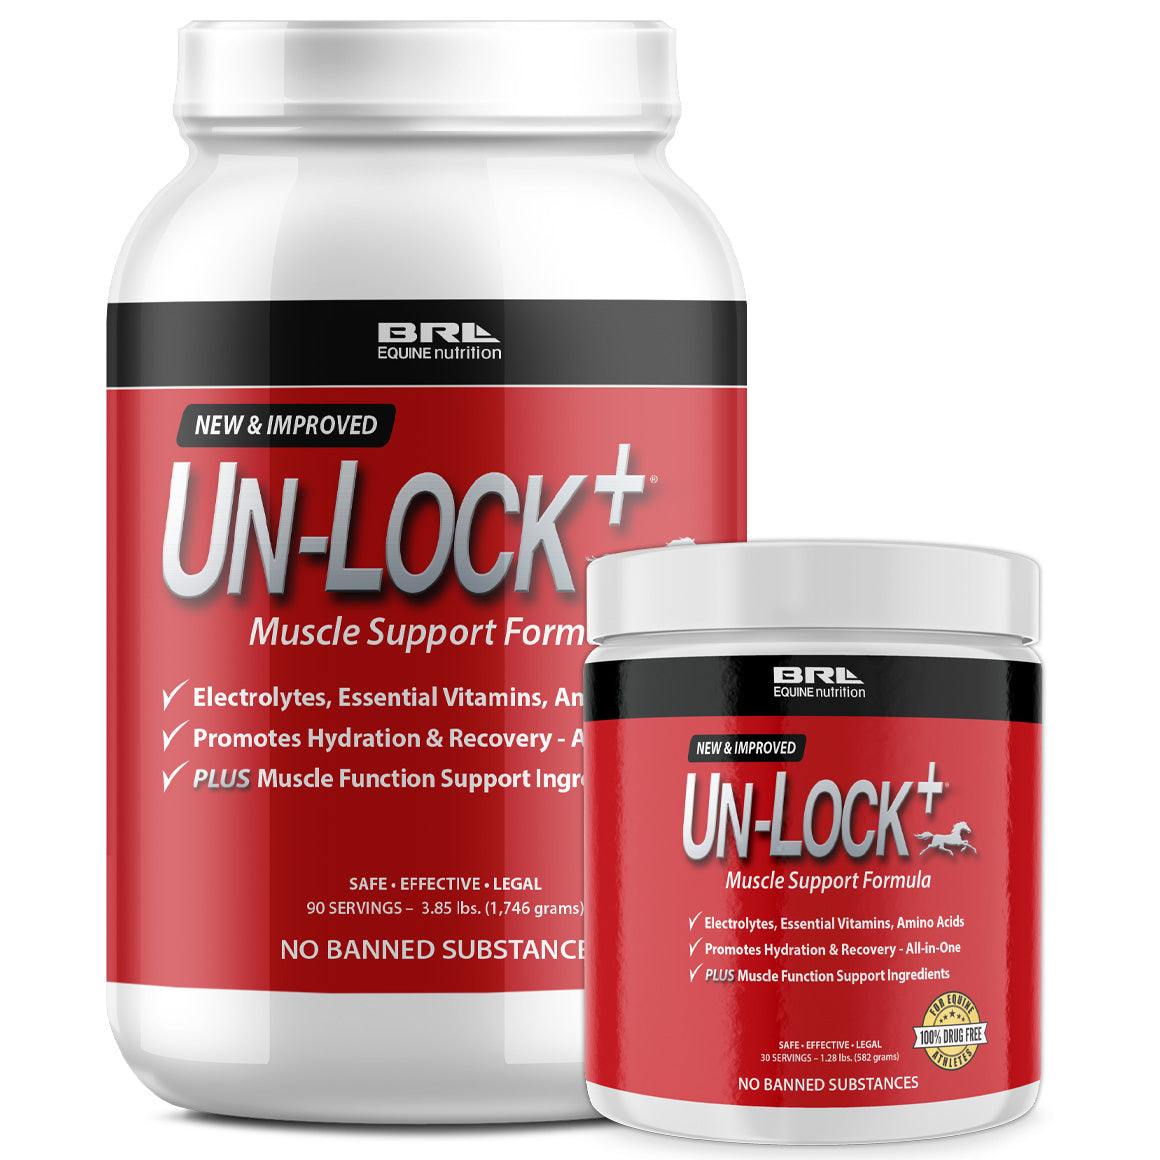  UnLock+ Muscle Support Formula